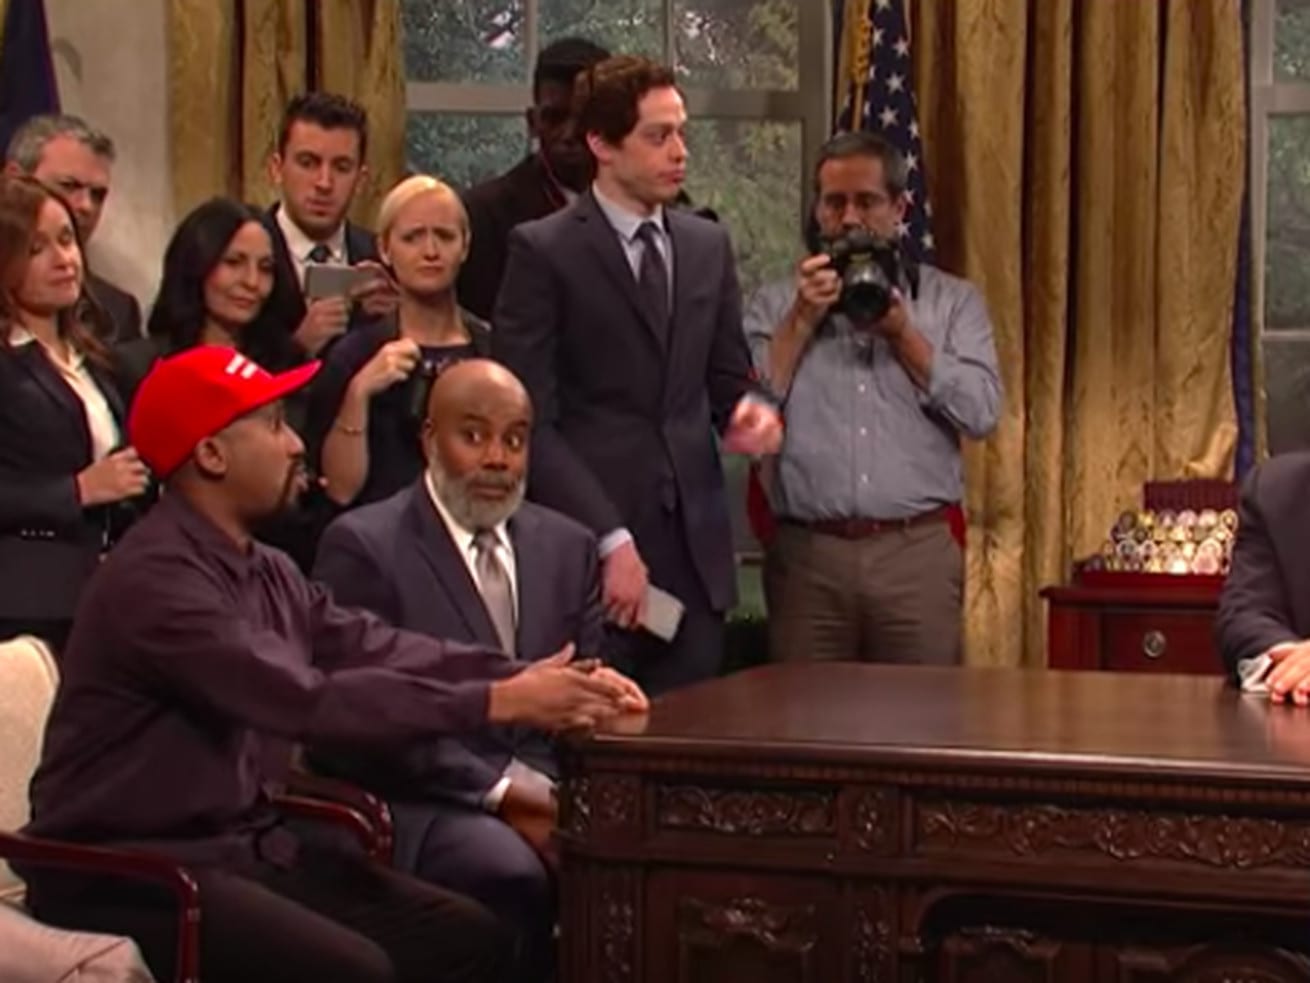 “He’s black me!”: Alec Baldwin returns to SNL to spoof Trump’s Kanye West meeting